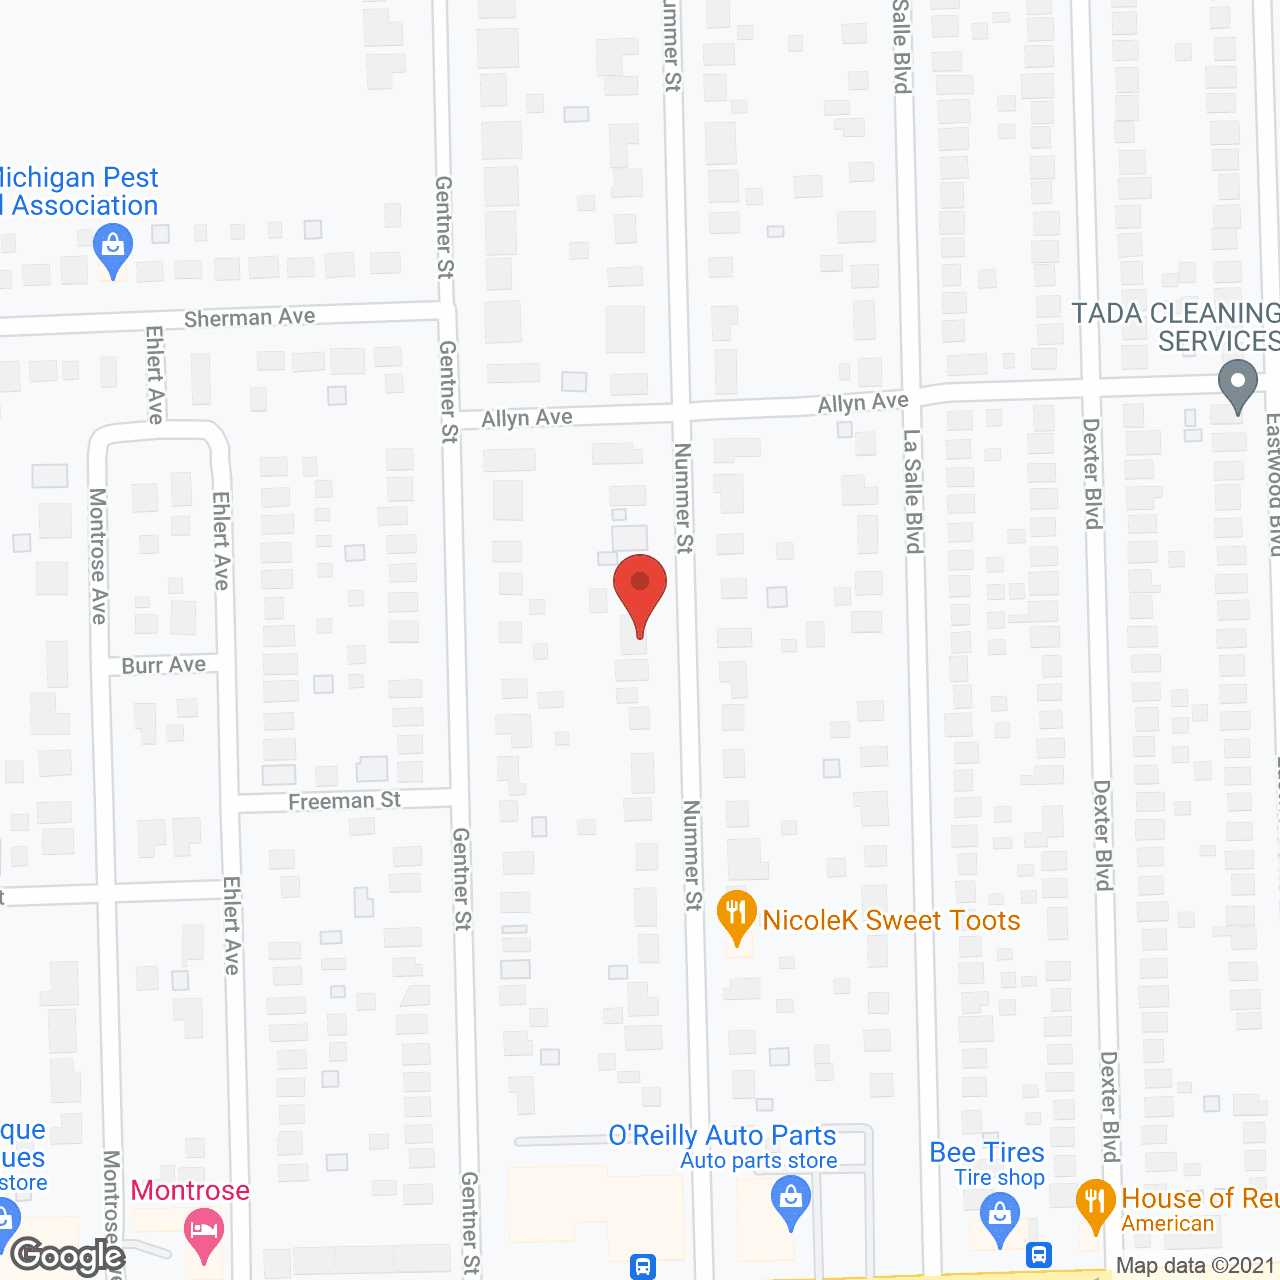 Nummer House in google map